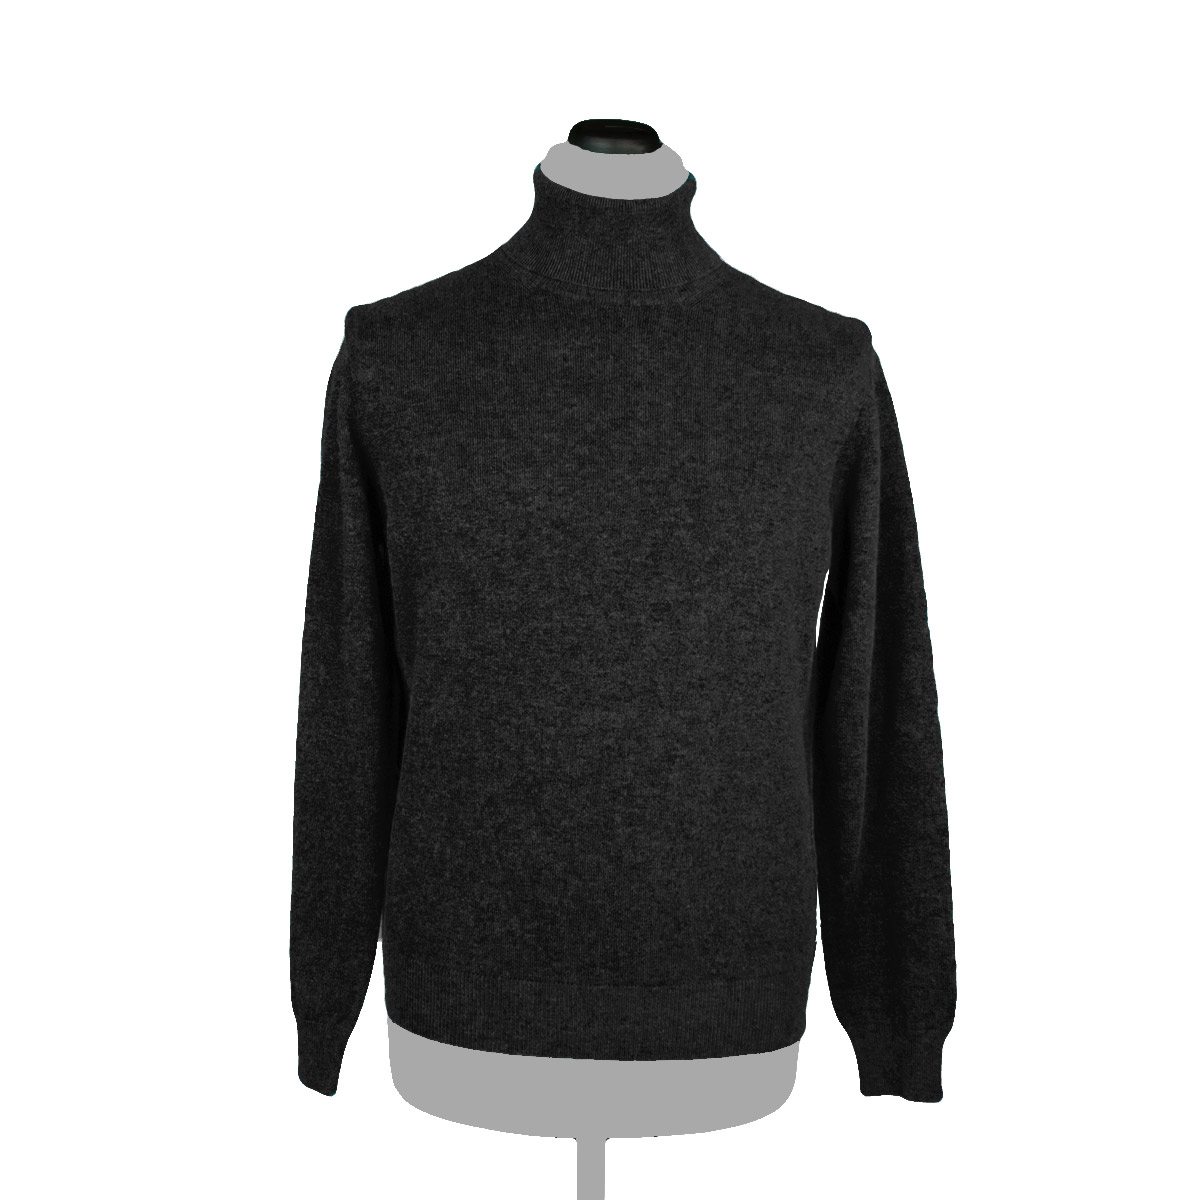 Cashmere turtleneck sweater for men, dark grey - Di Franco Moda Italiana